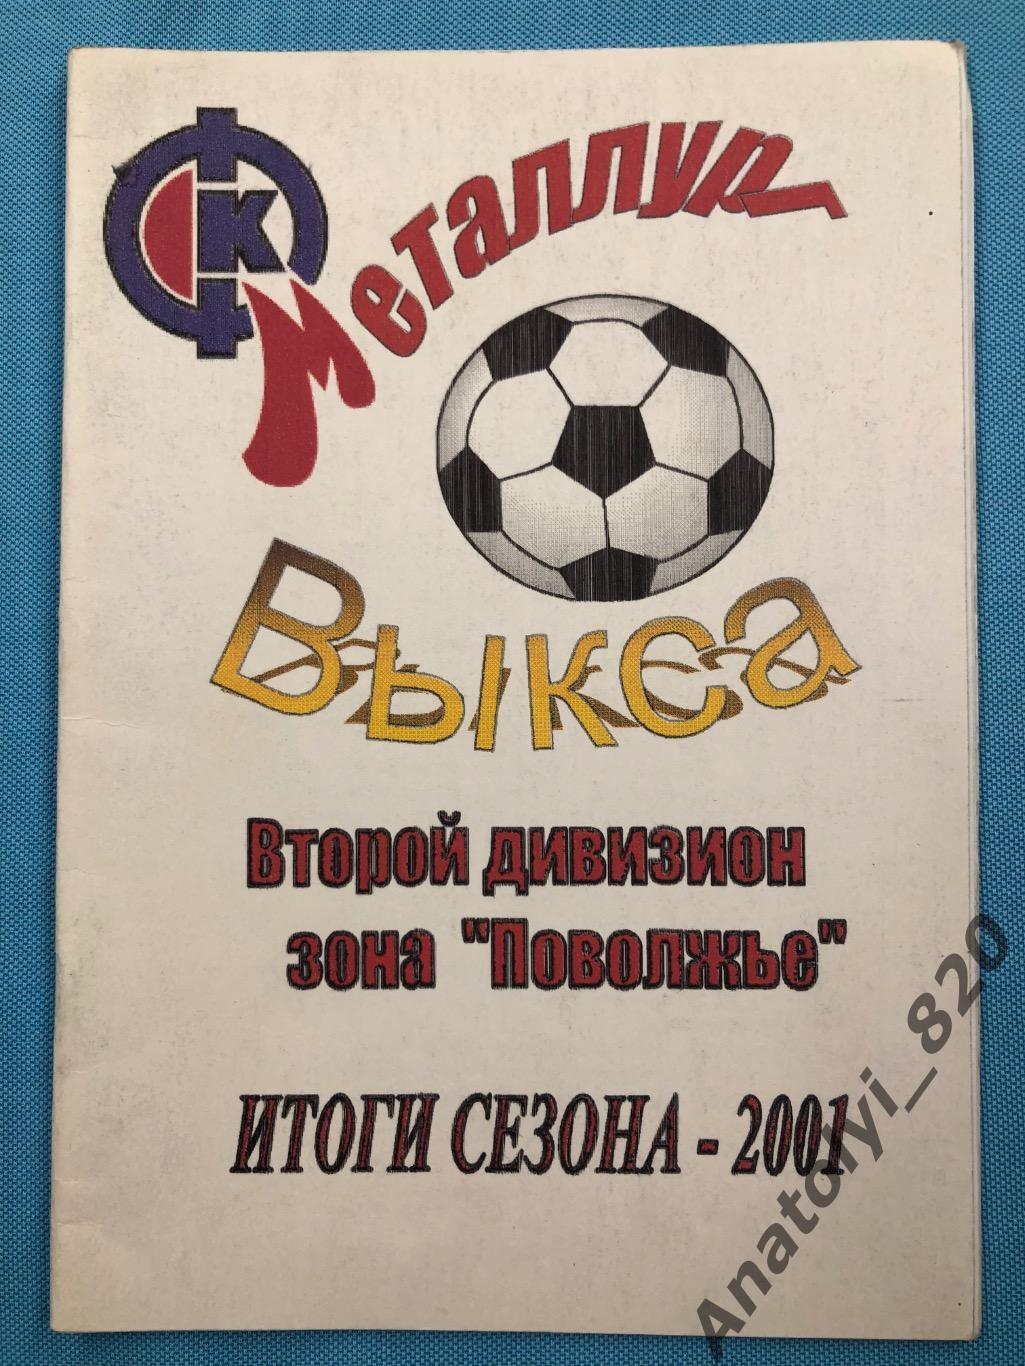 Металлург Выкса 2001 год календарь - справочник